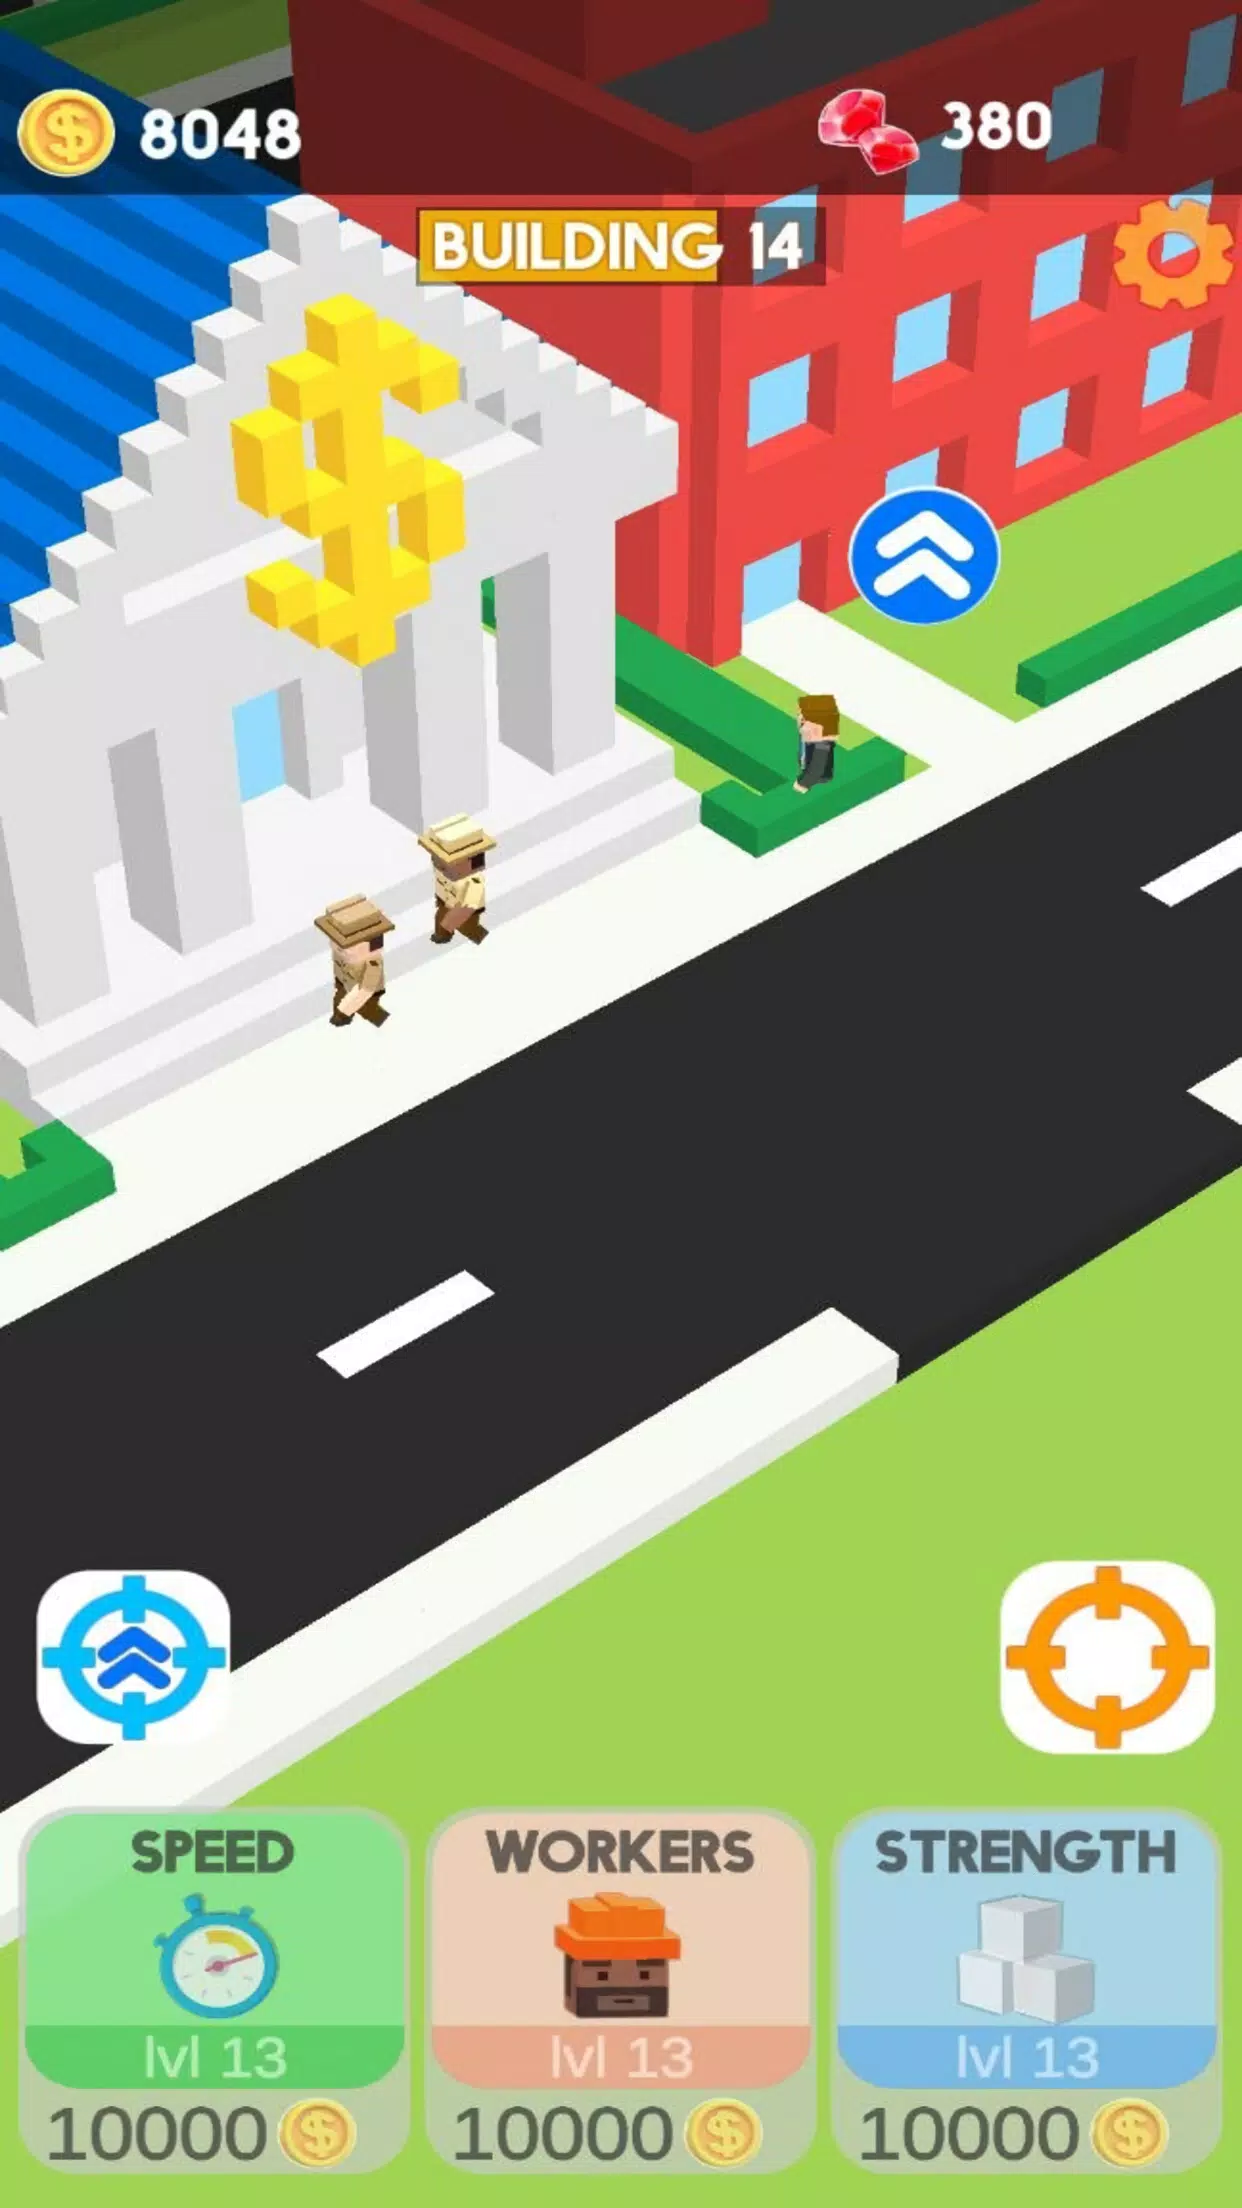 Download do APK de Idle City Builder para Android